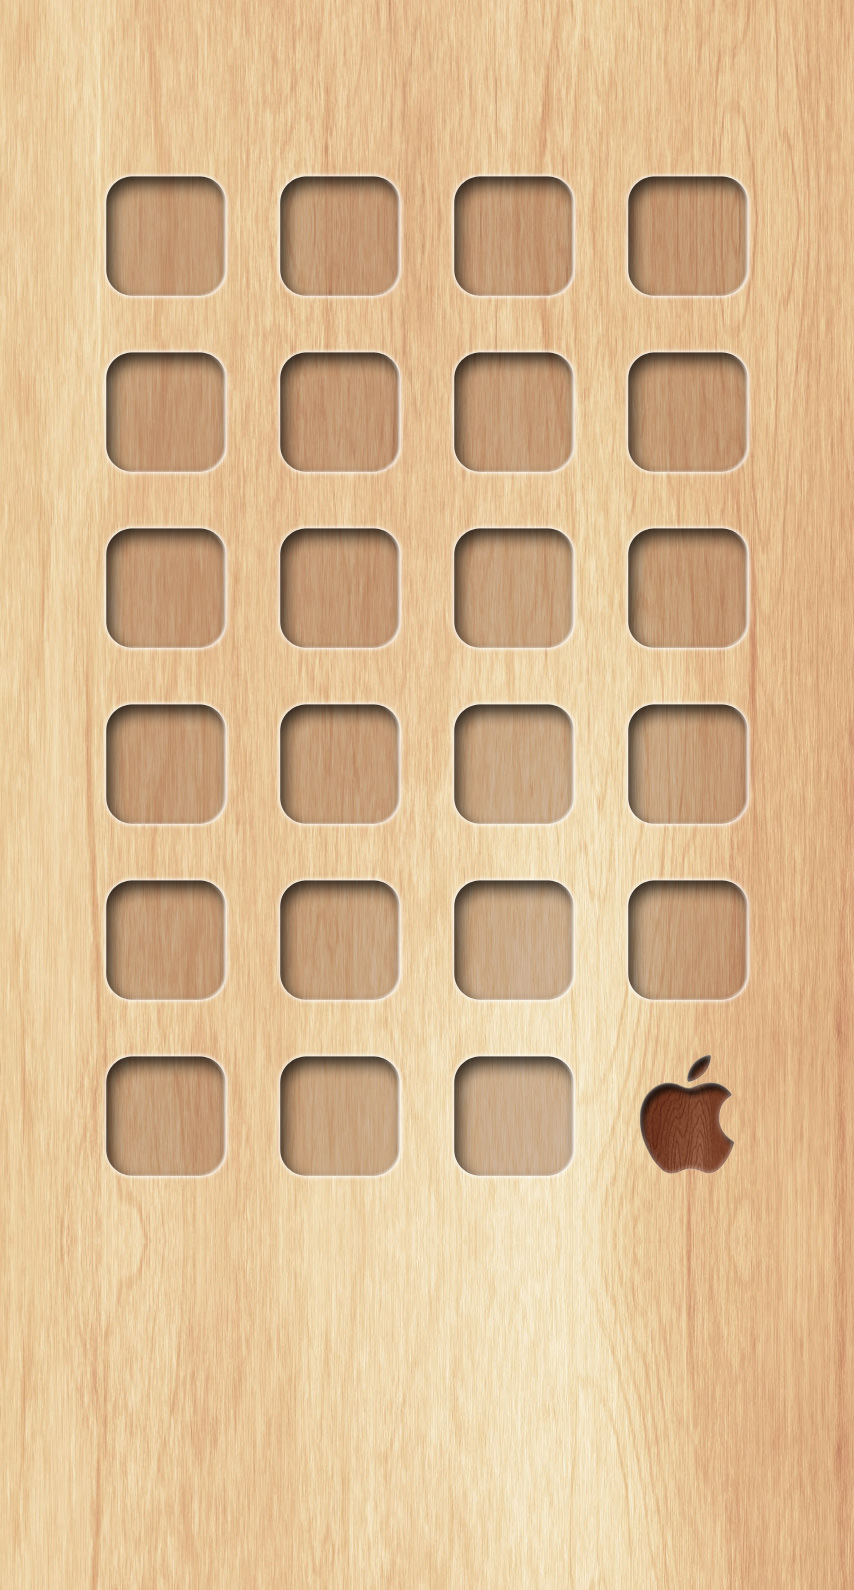 iPhone 6 Wallpaper